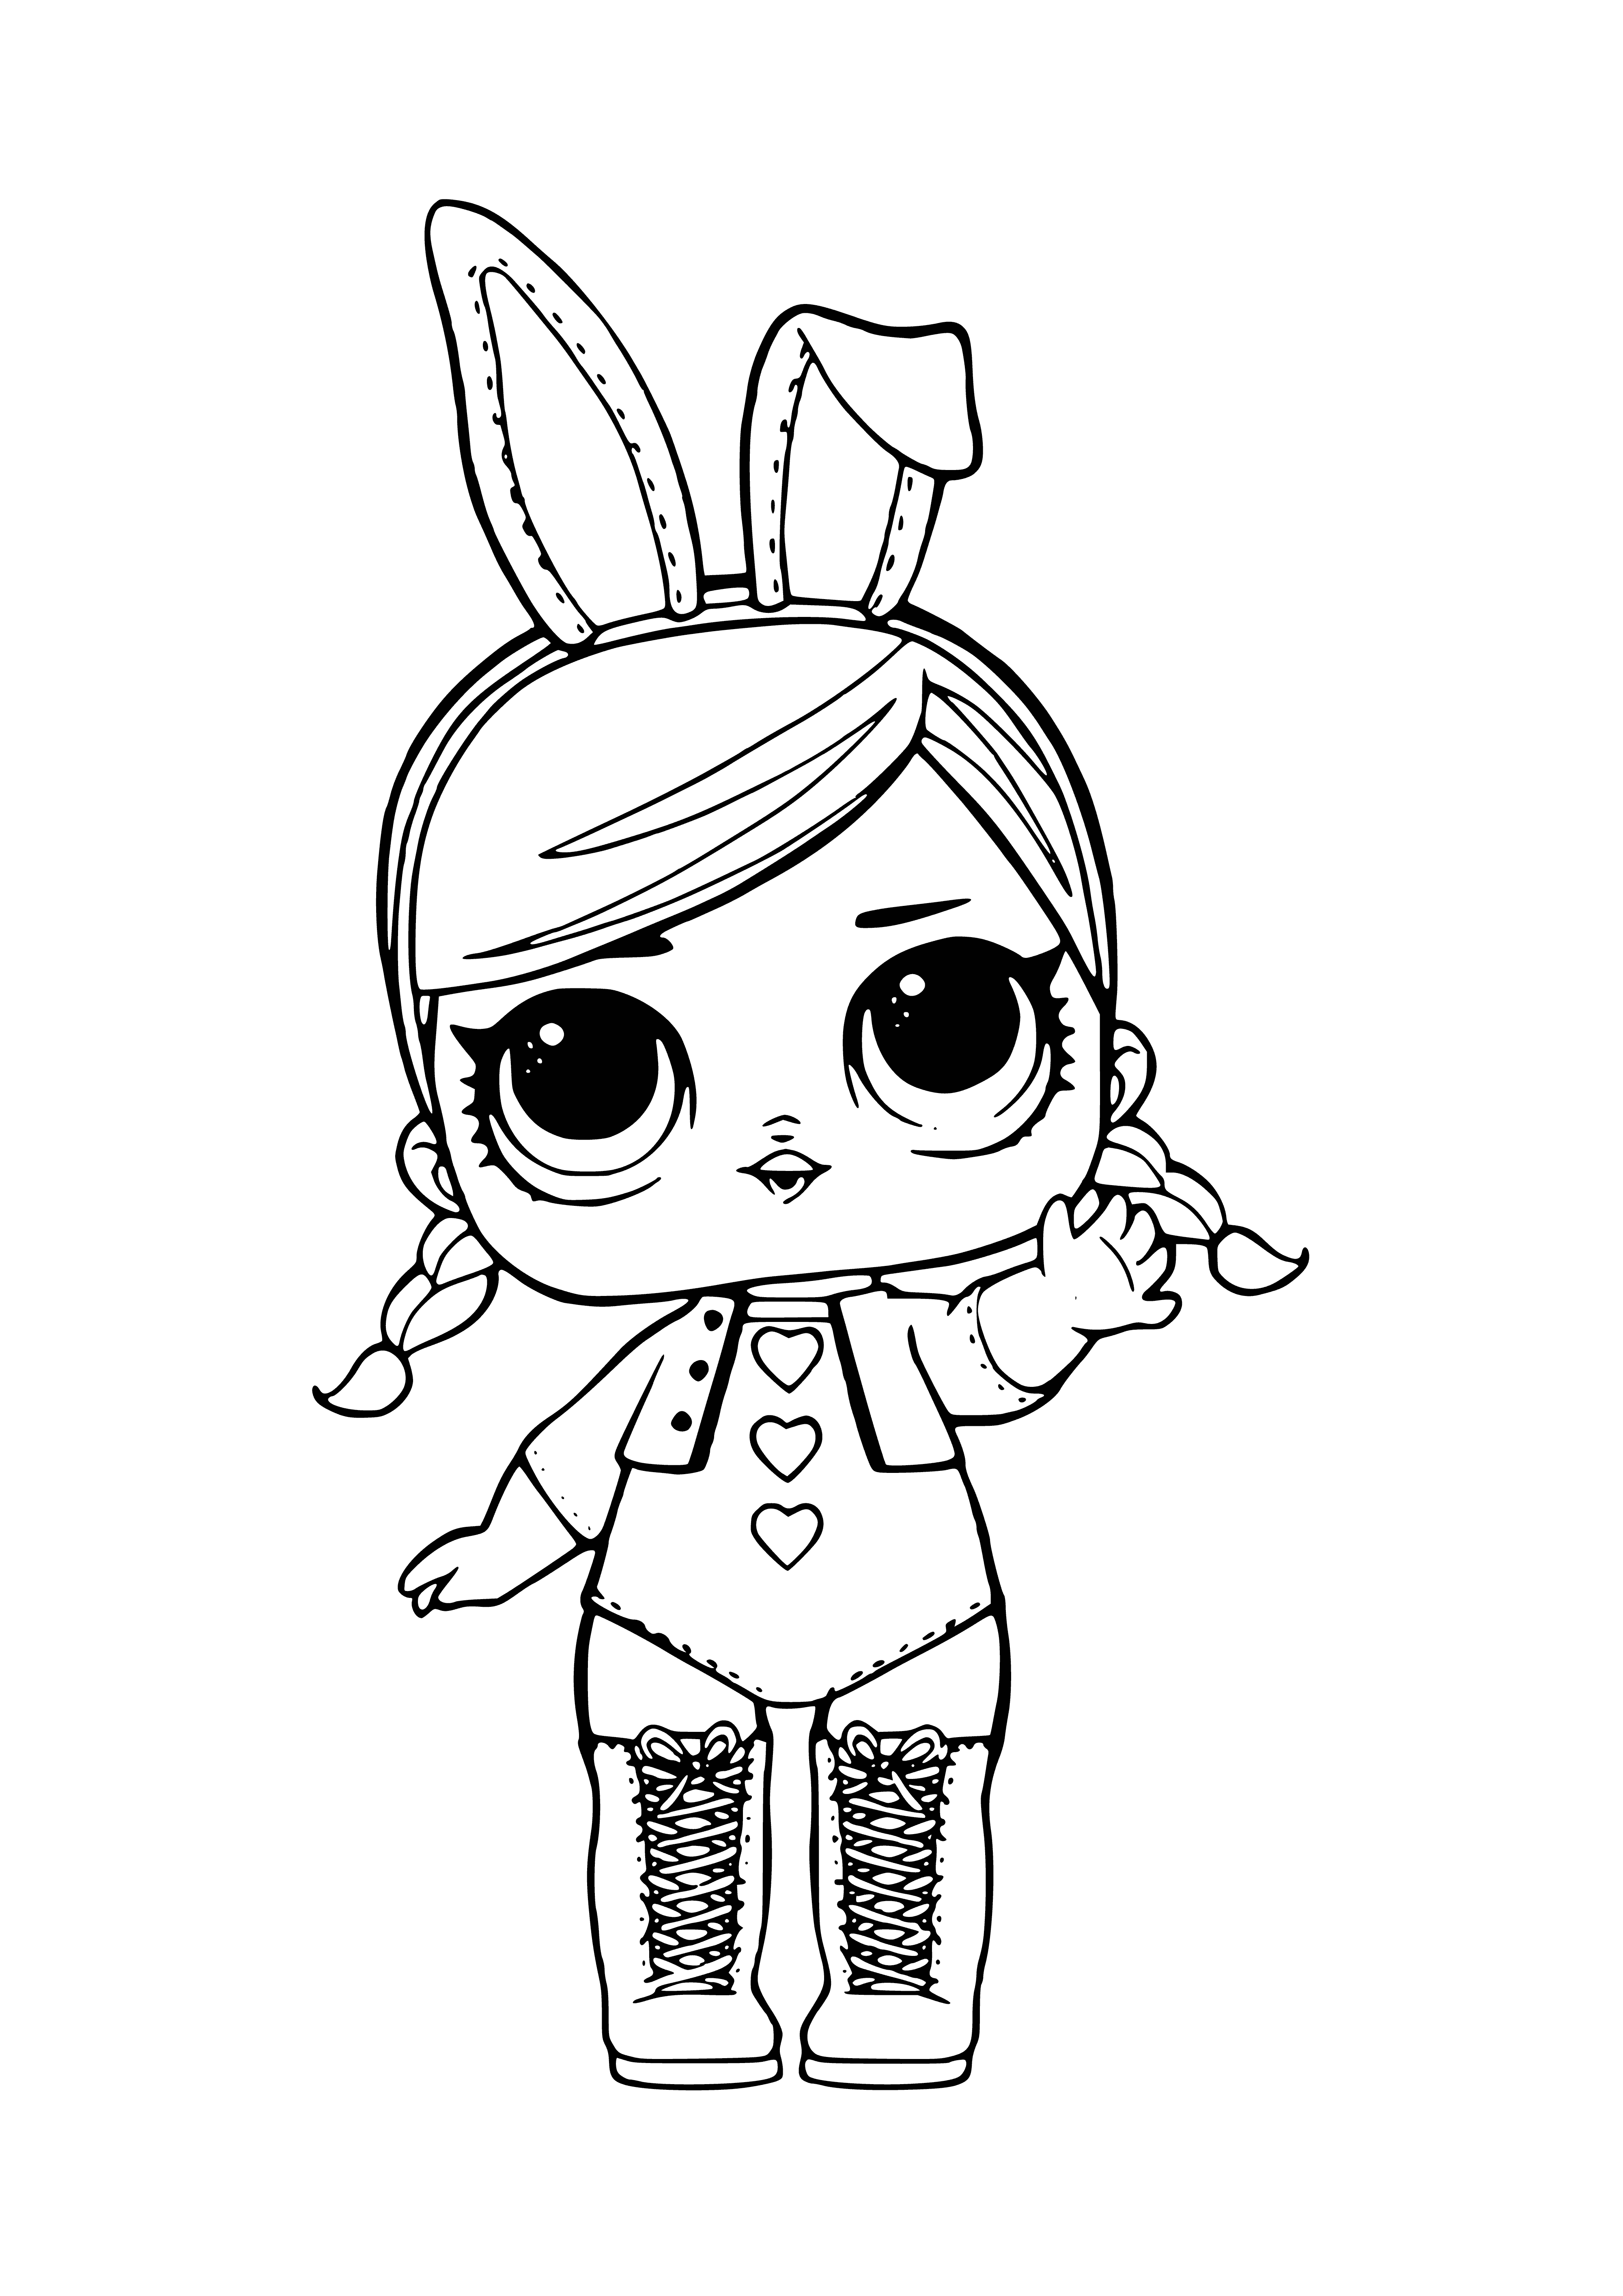 LOL Hops (Bunny Hops) episode 2 coloring page